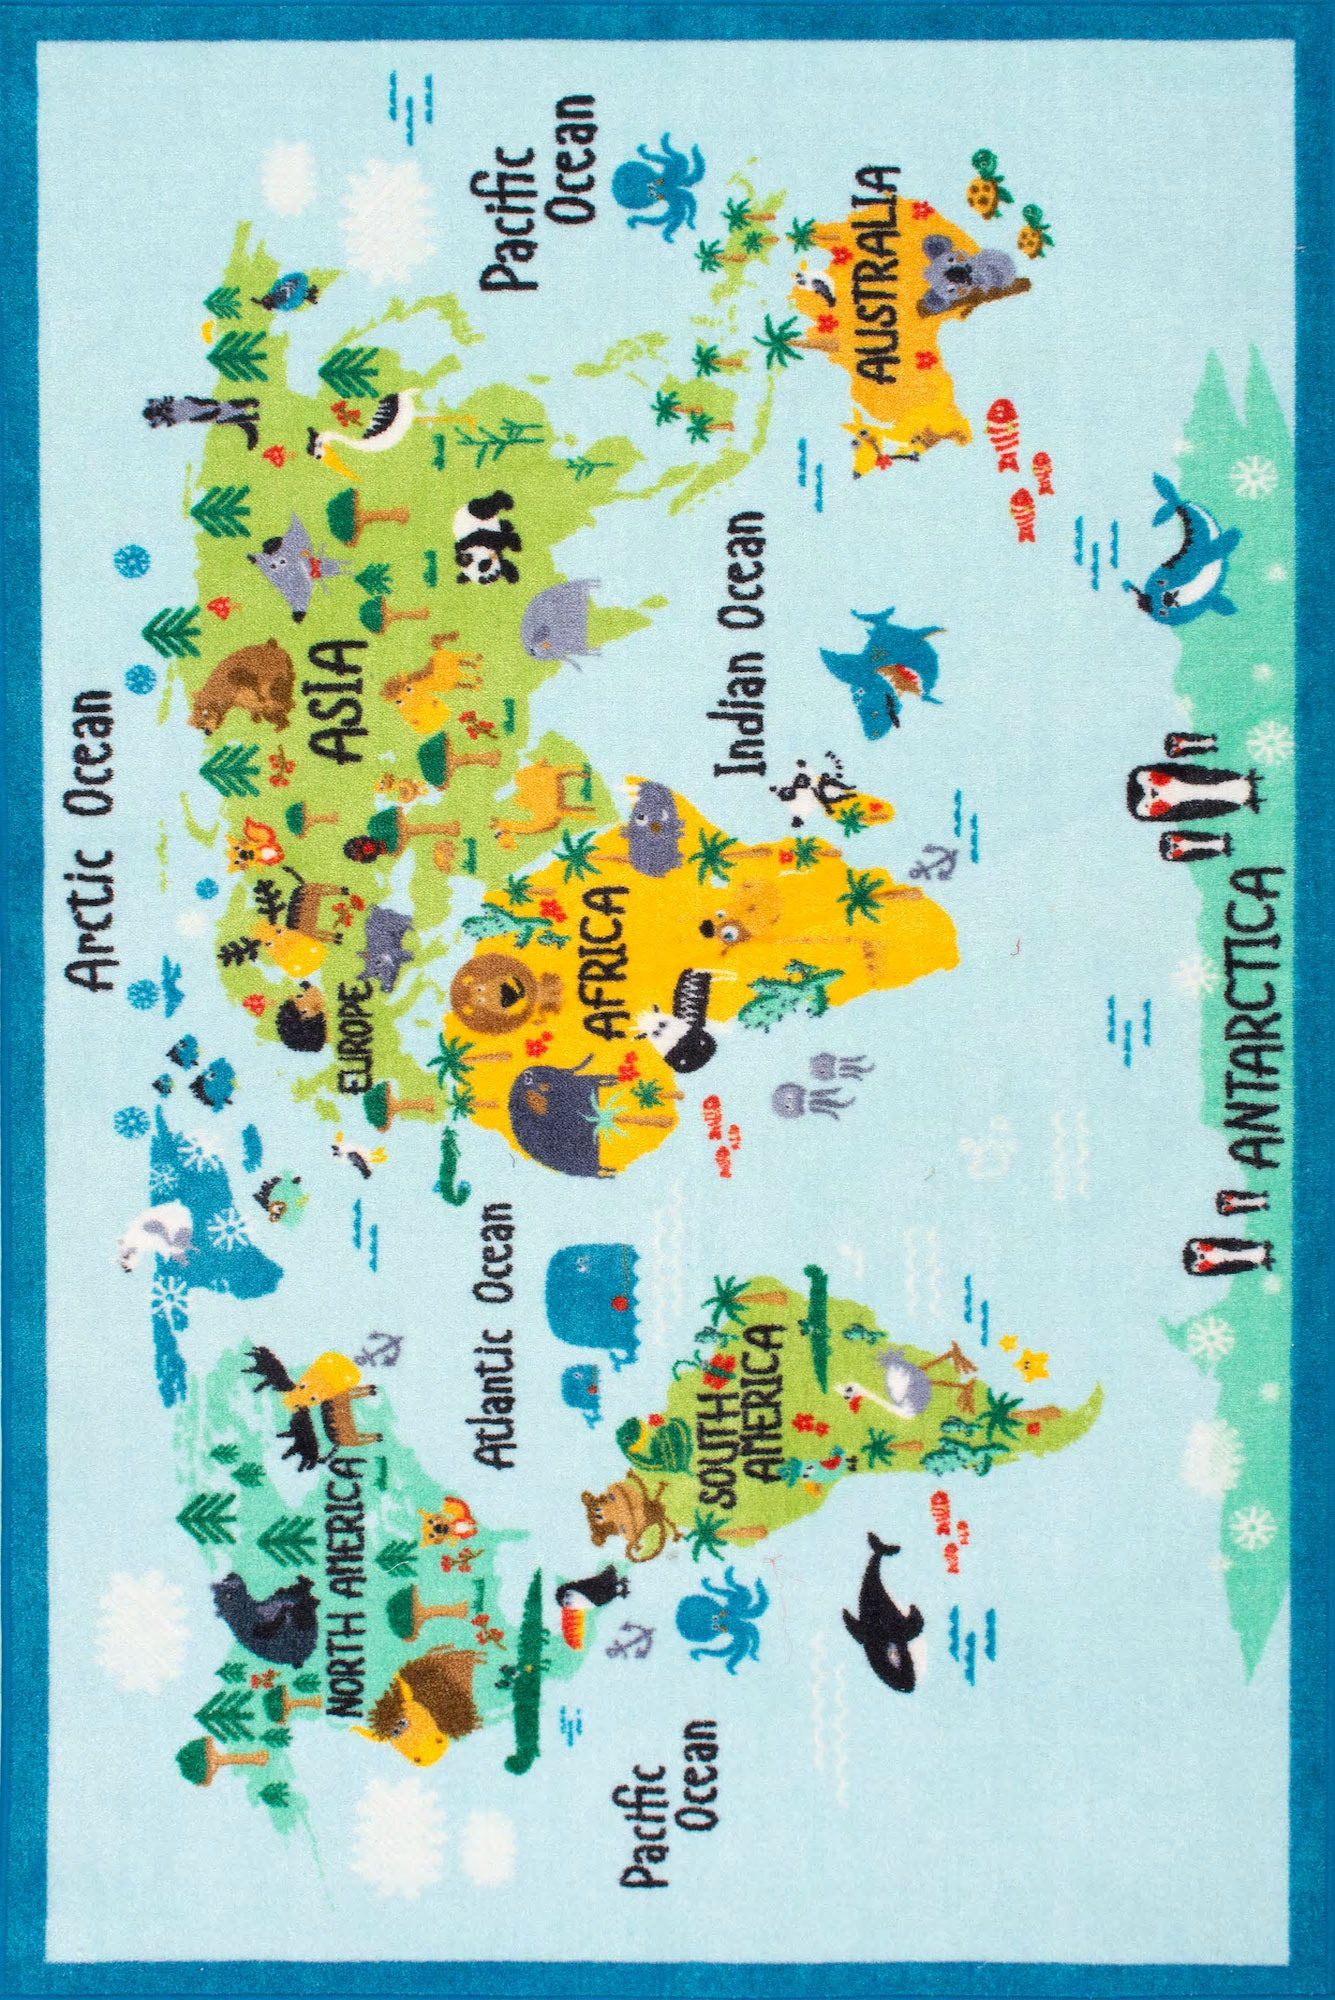 Kids Blue World Map Rug